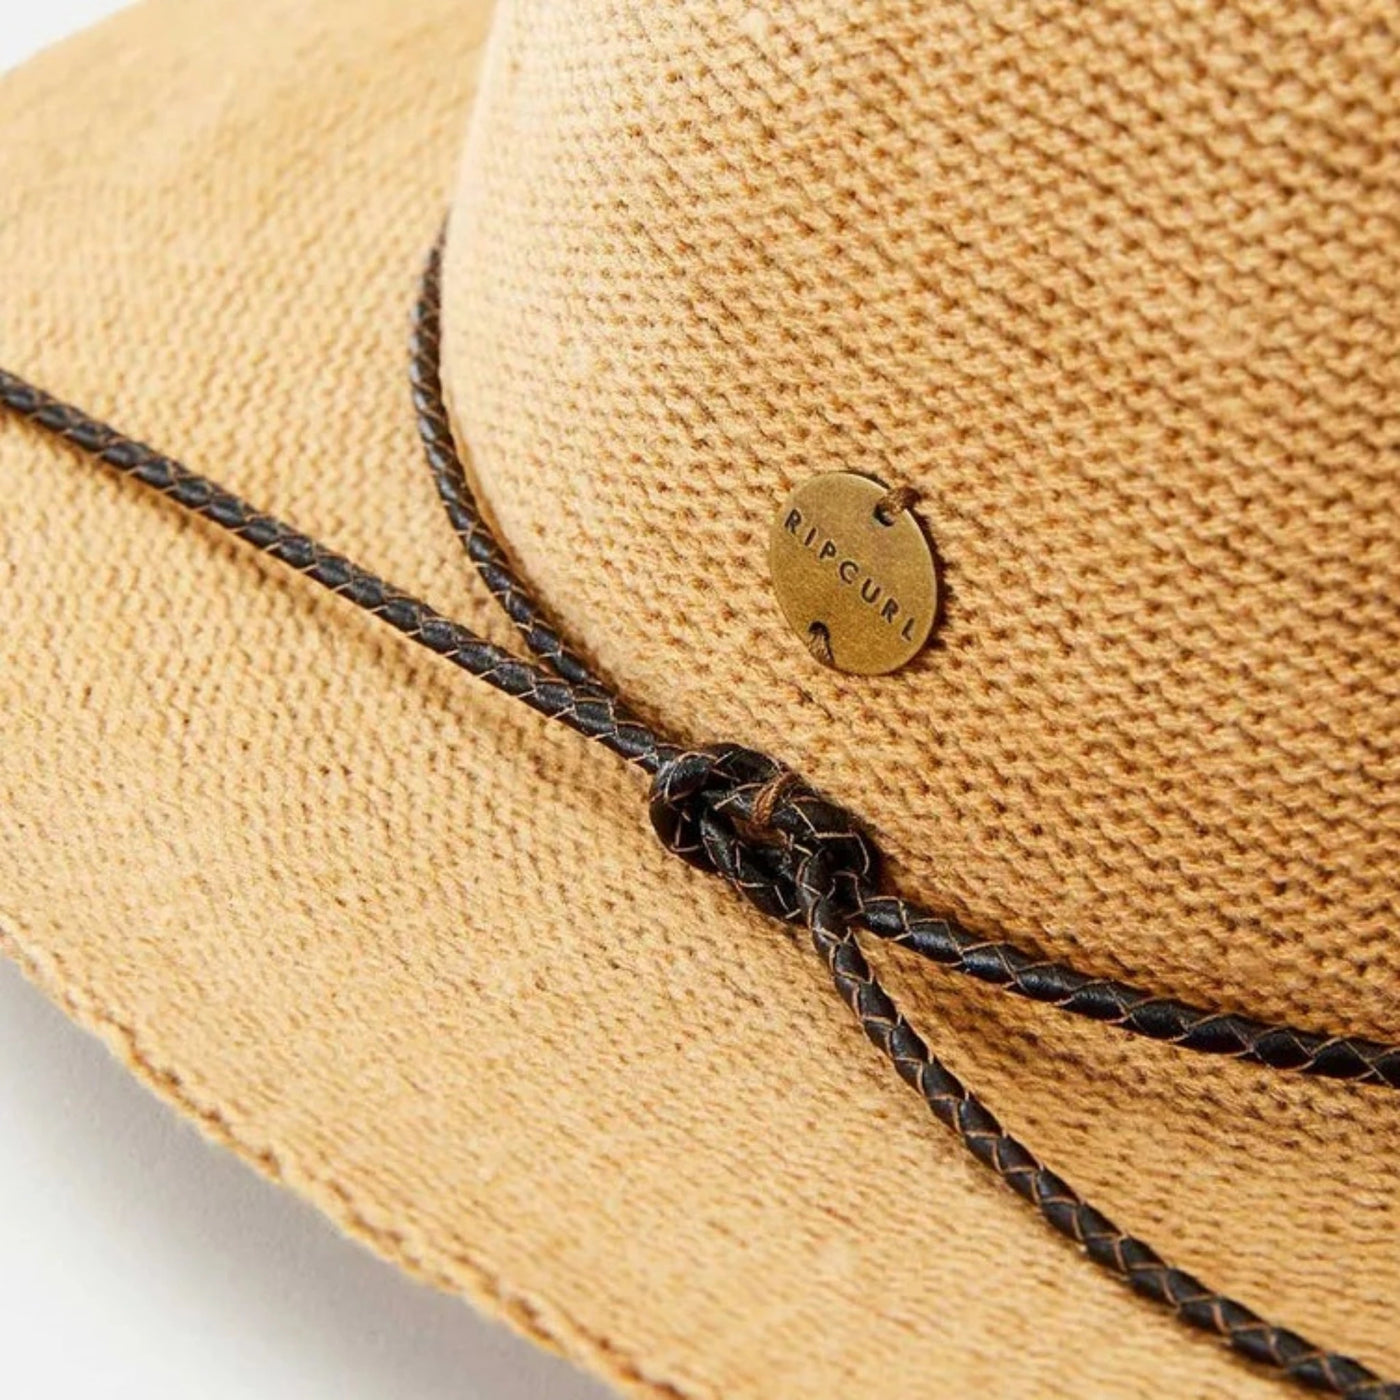 Rip Curl Women's Spice Temple Knit Panama Hat - Sand